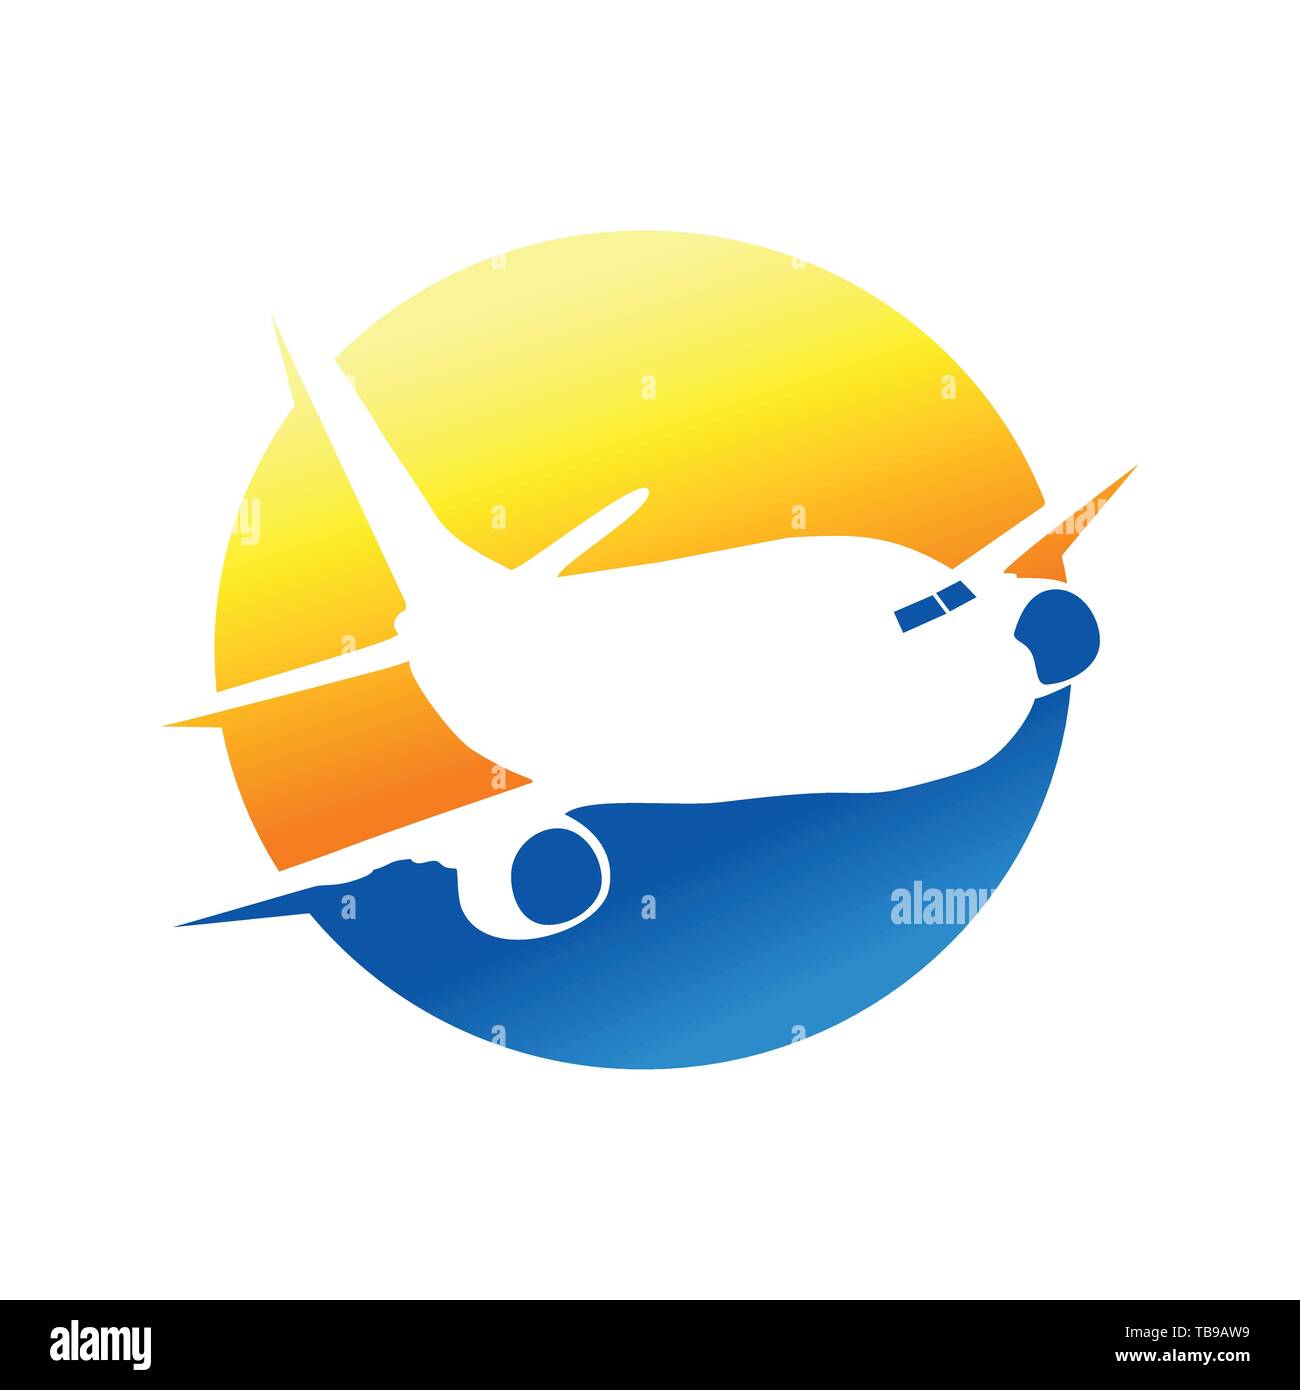 Unique Circular Flying Airplane Silhouette Mark Vector Symbol Graphic Logo Design Template Stock Vector